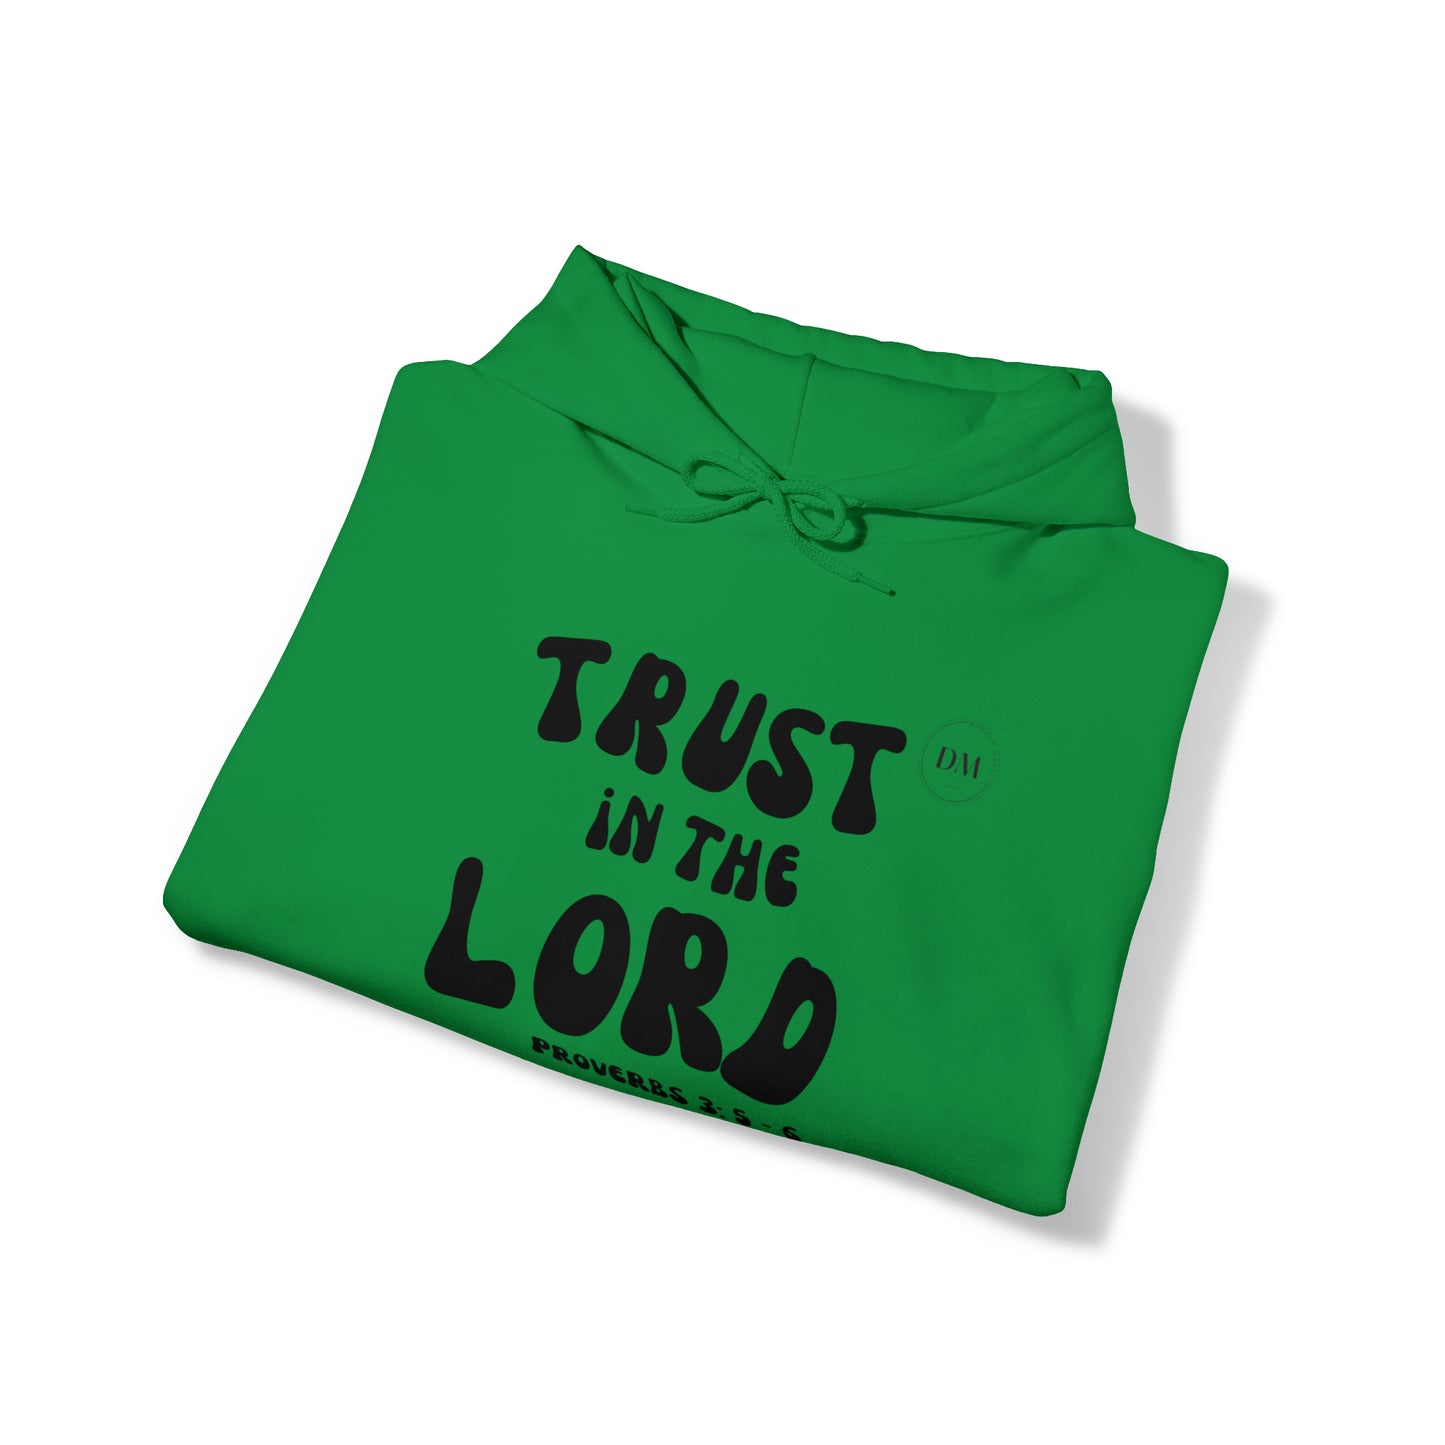 DM - Trust In The Lord Unisex Hooded Sweatshirt